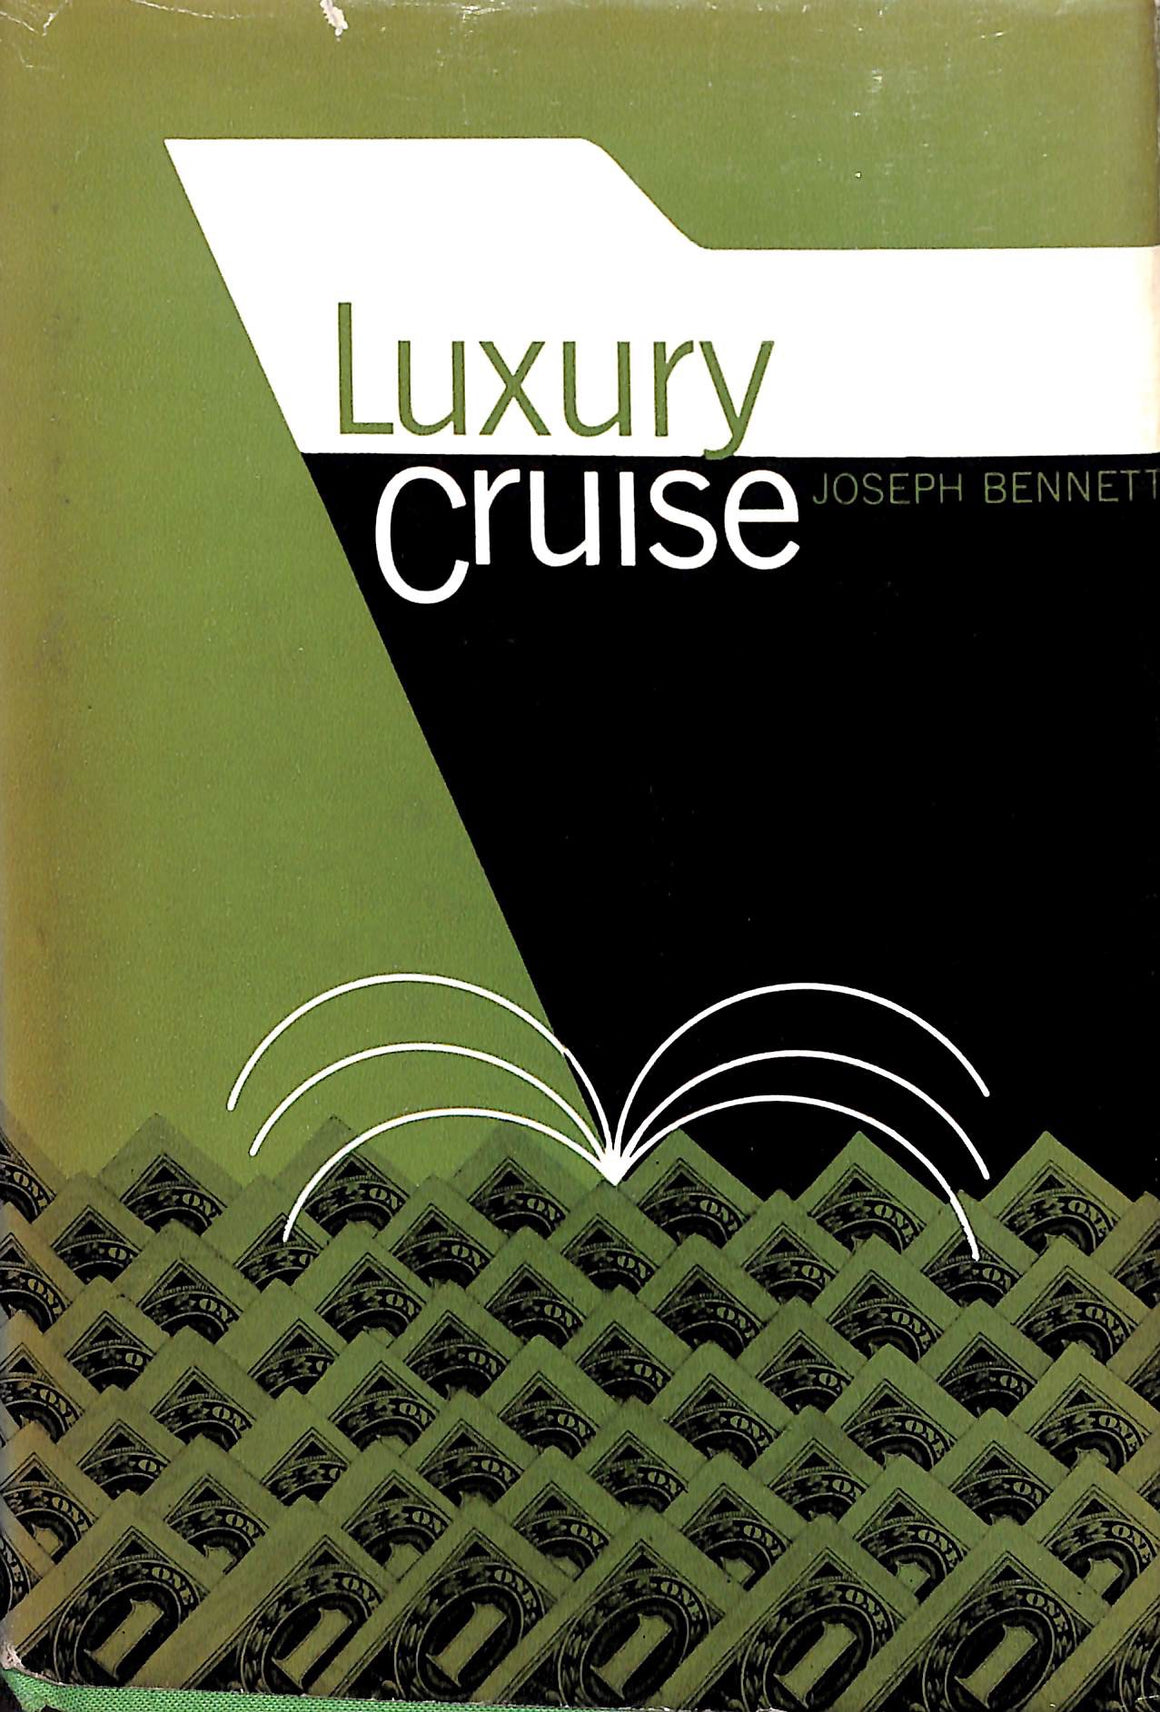 Luxury Cruise by Joseph Bennett (Inscribed!)